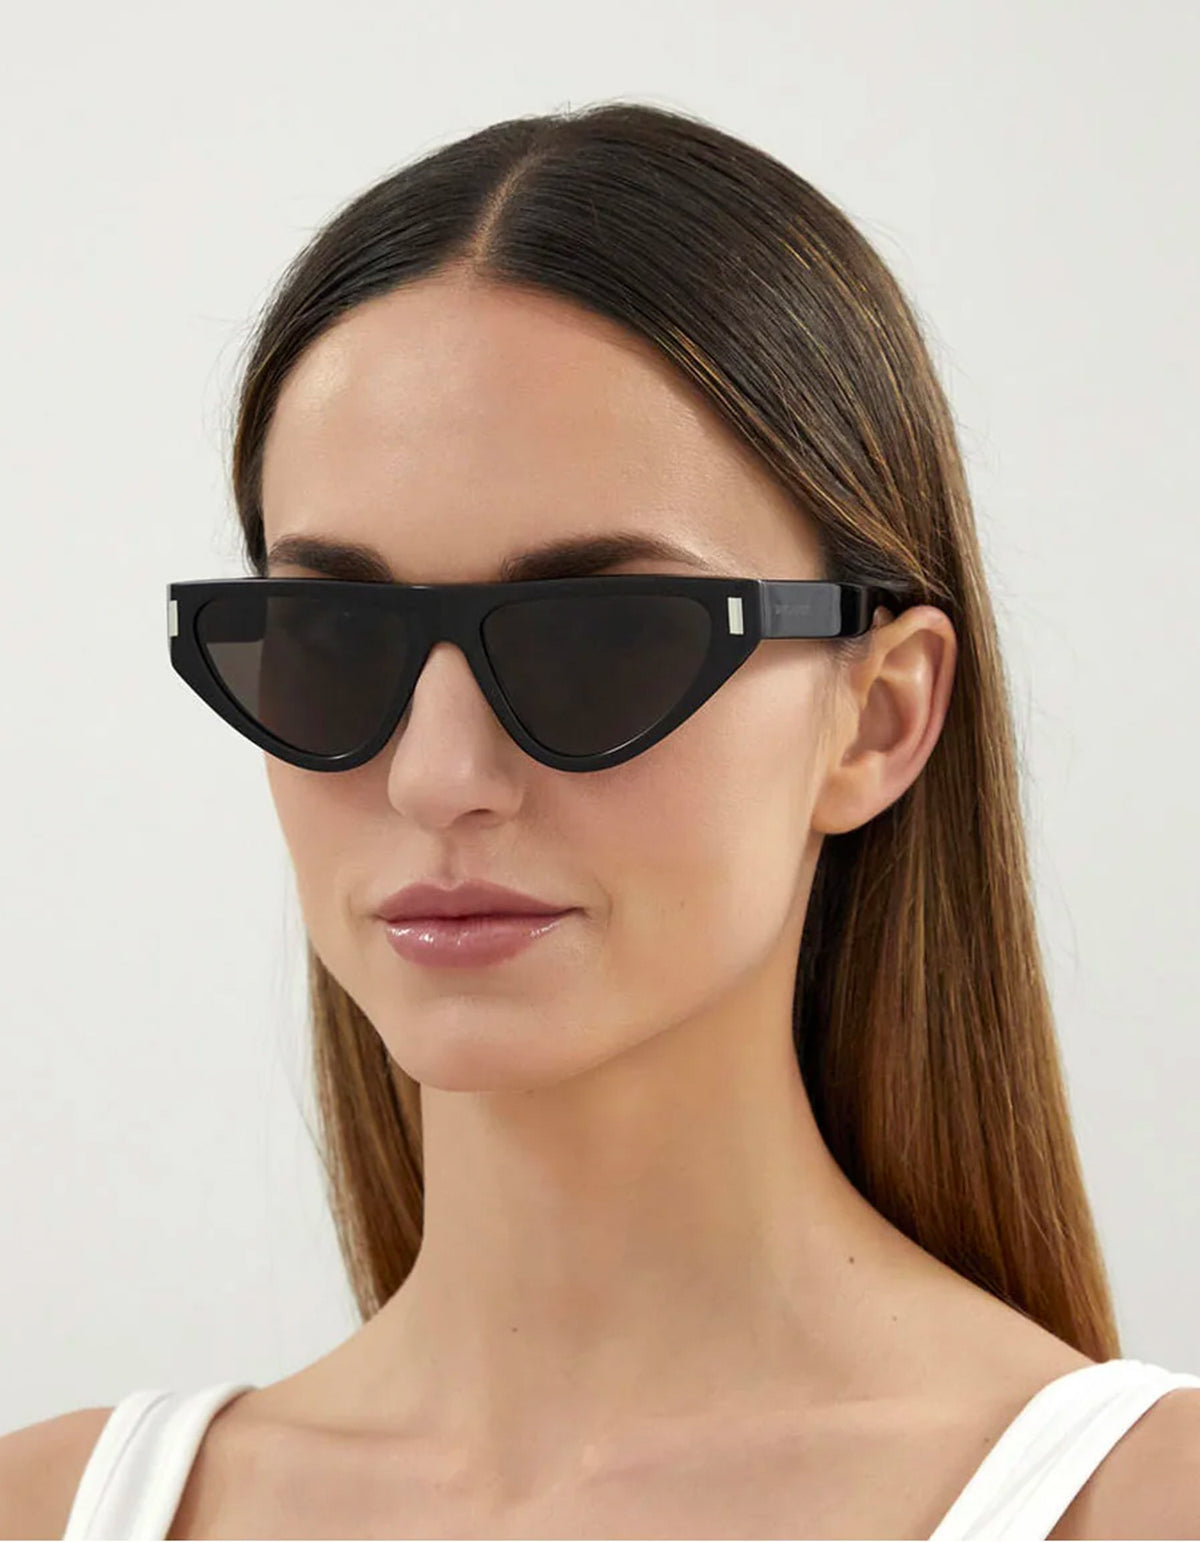 Sunglasses Saint Laurent SL 468 - 001 Black /